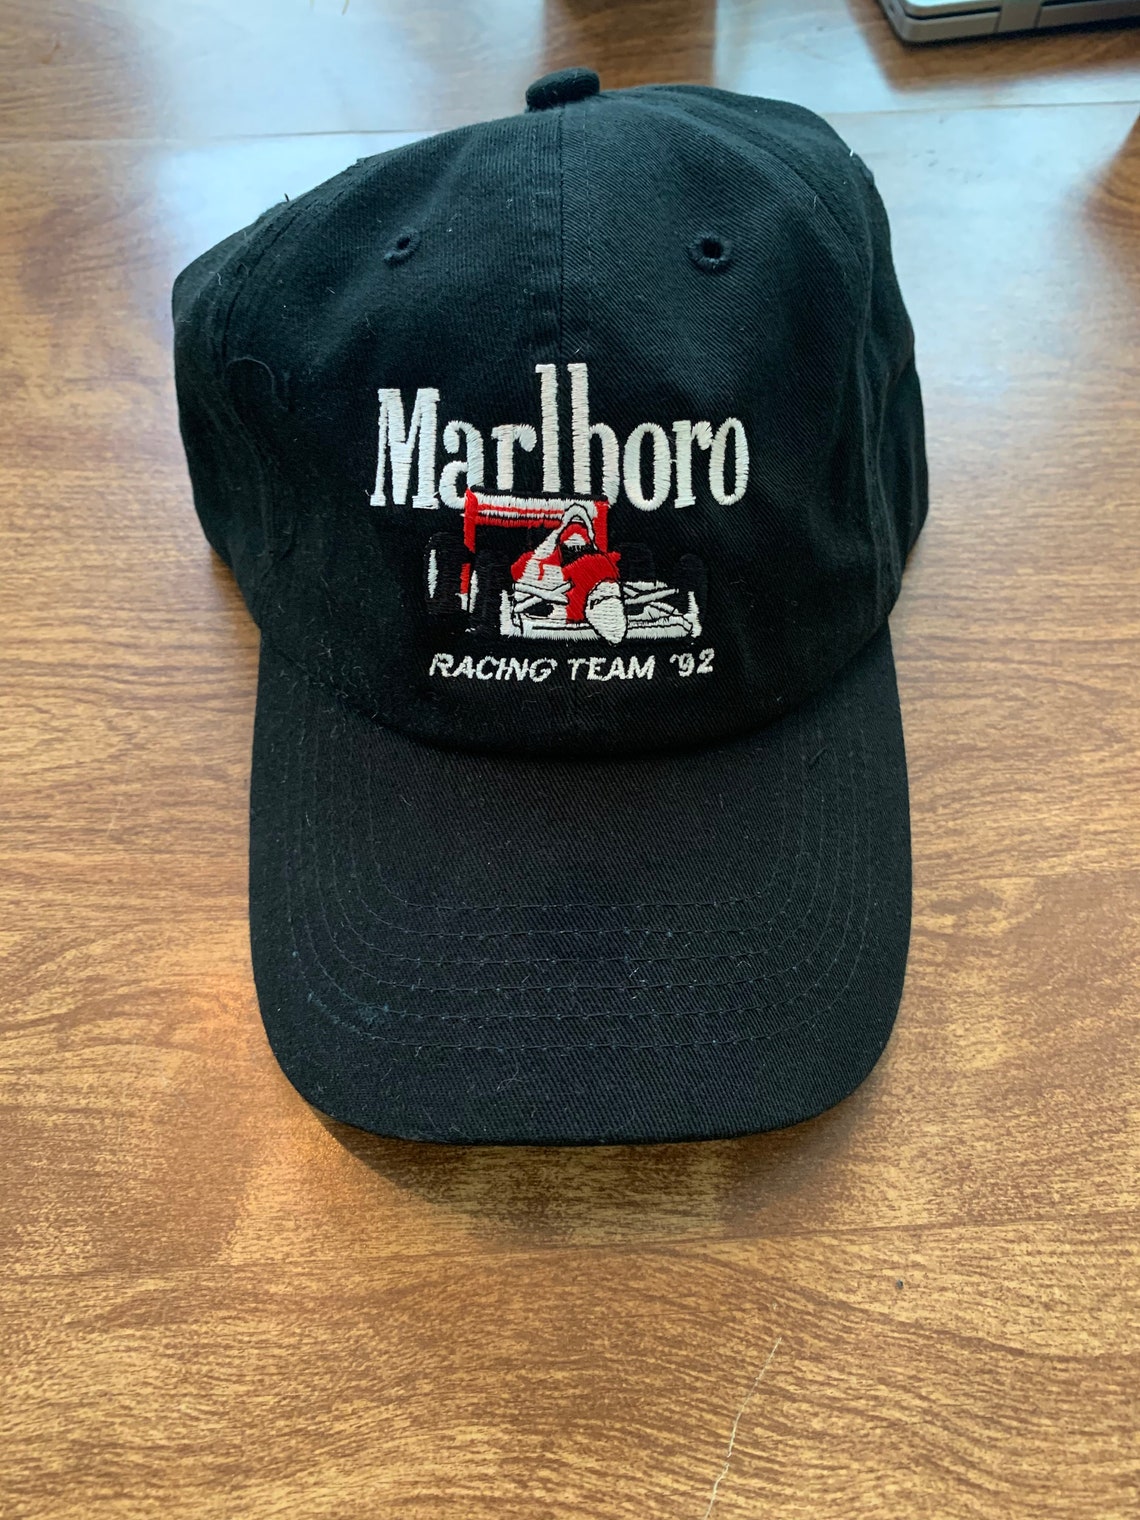 Malboro racing team hat | Etsy